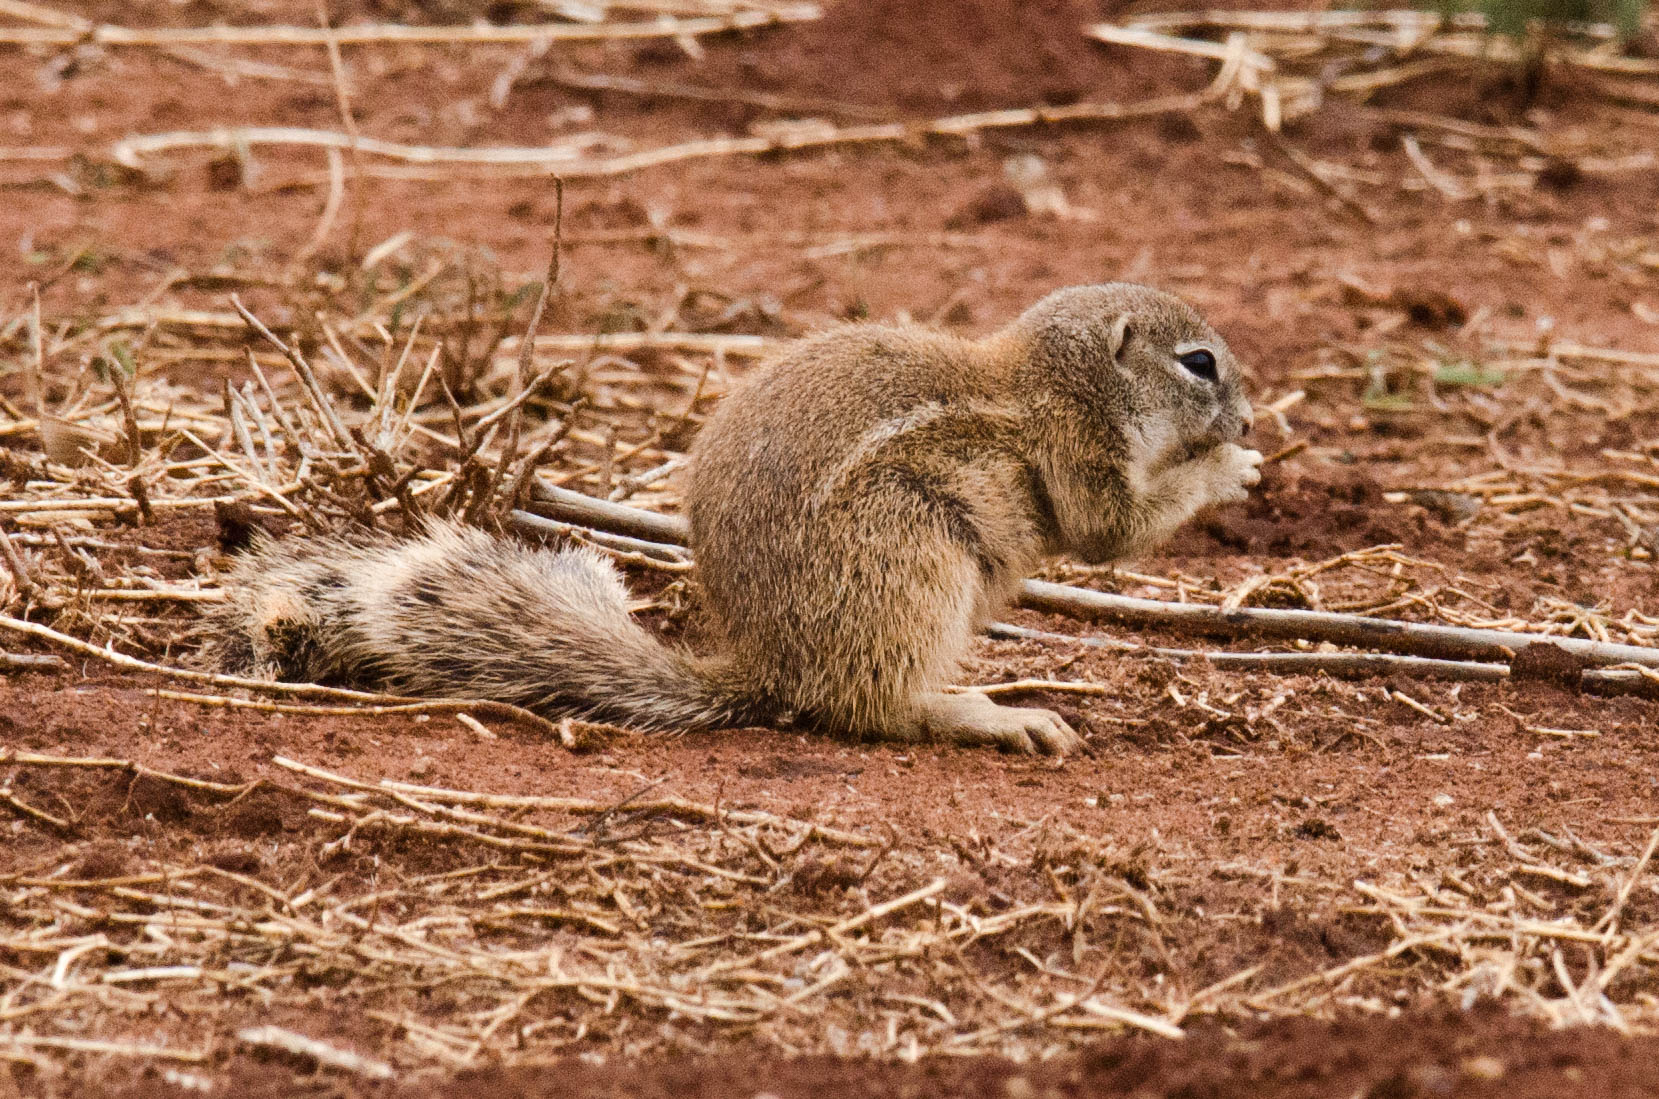 Ground squirrel, Madikwe Game Reserve, South Africa